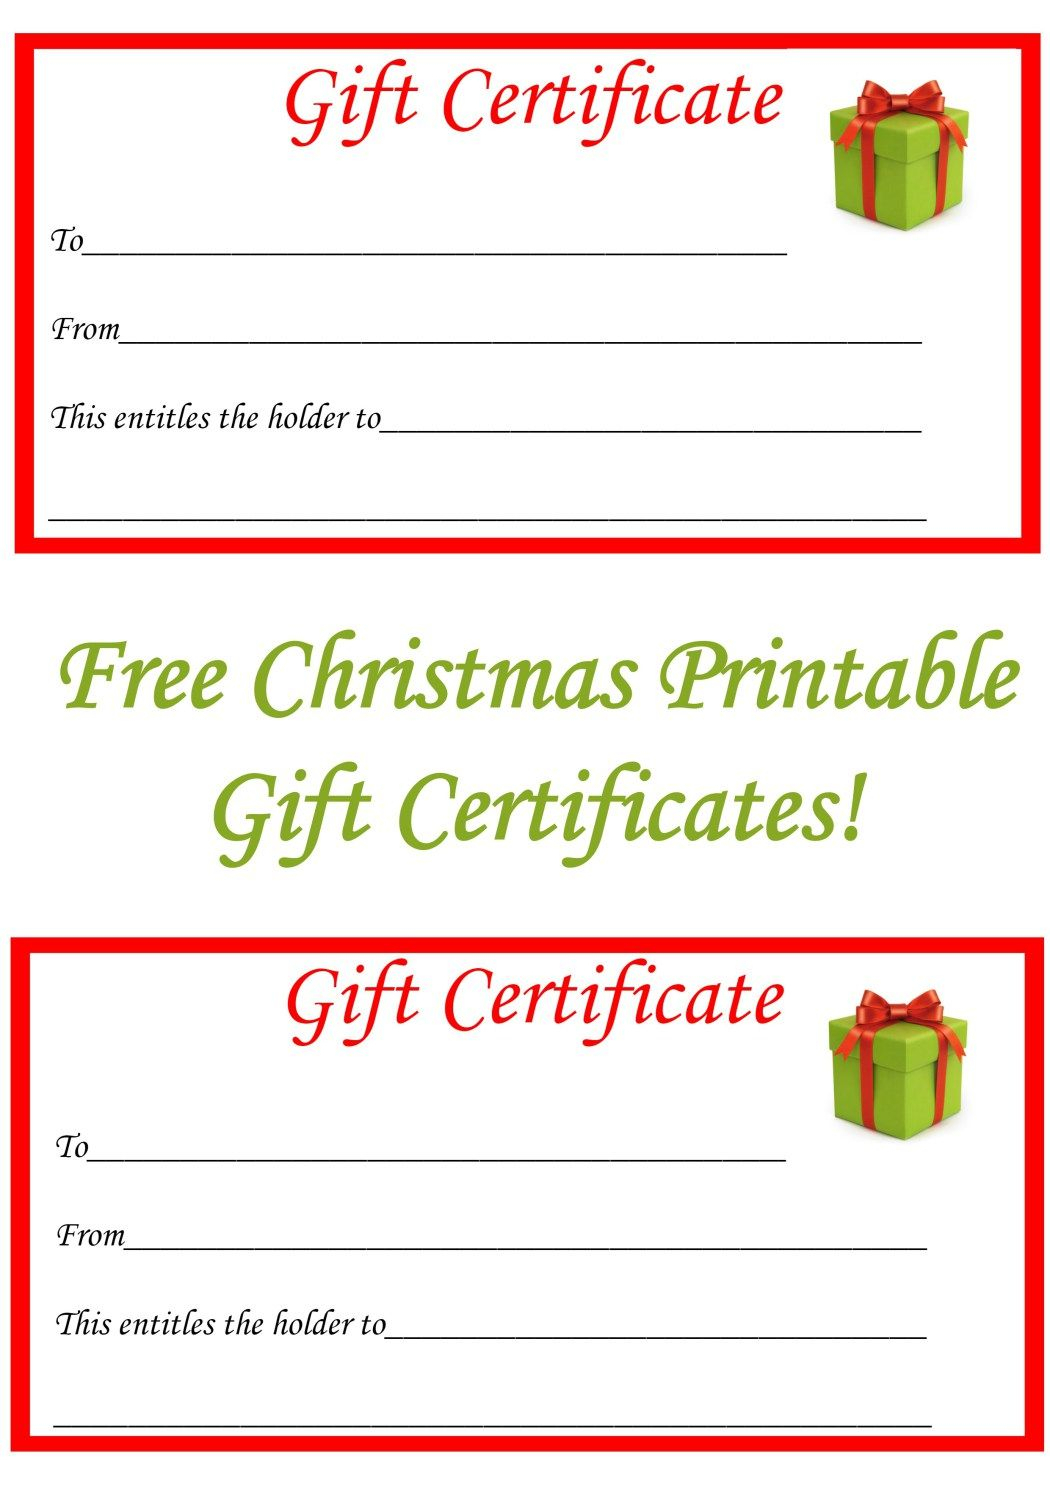 Free Christmas Printable Gift Certificates | Gift Ideas With Free Christmas Gift Certificate Templates